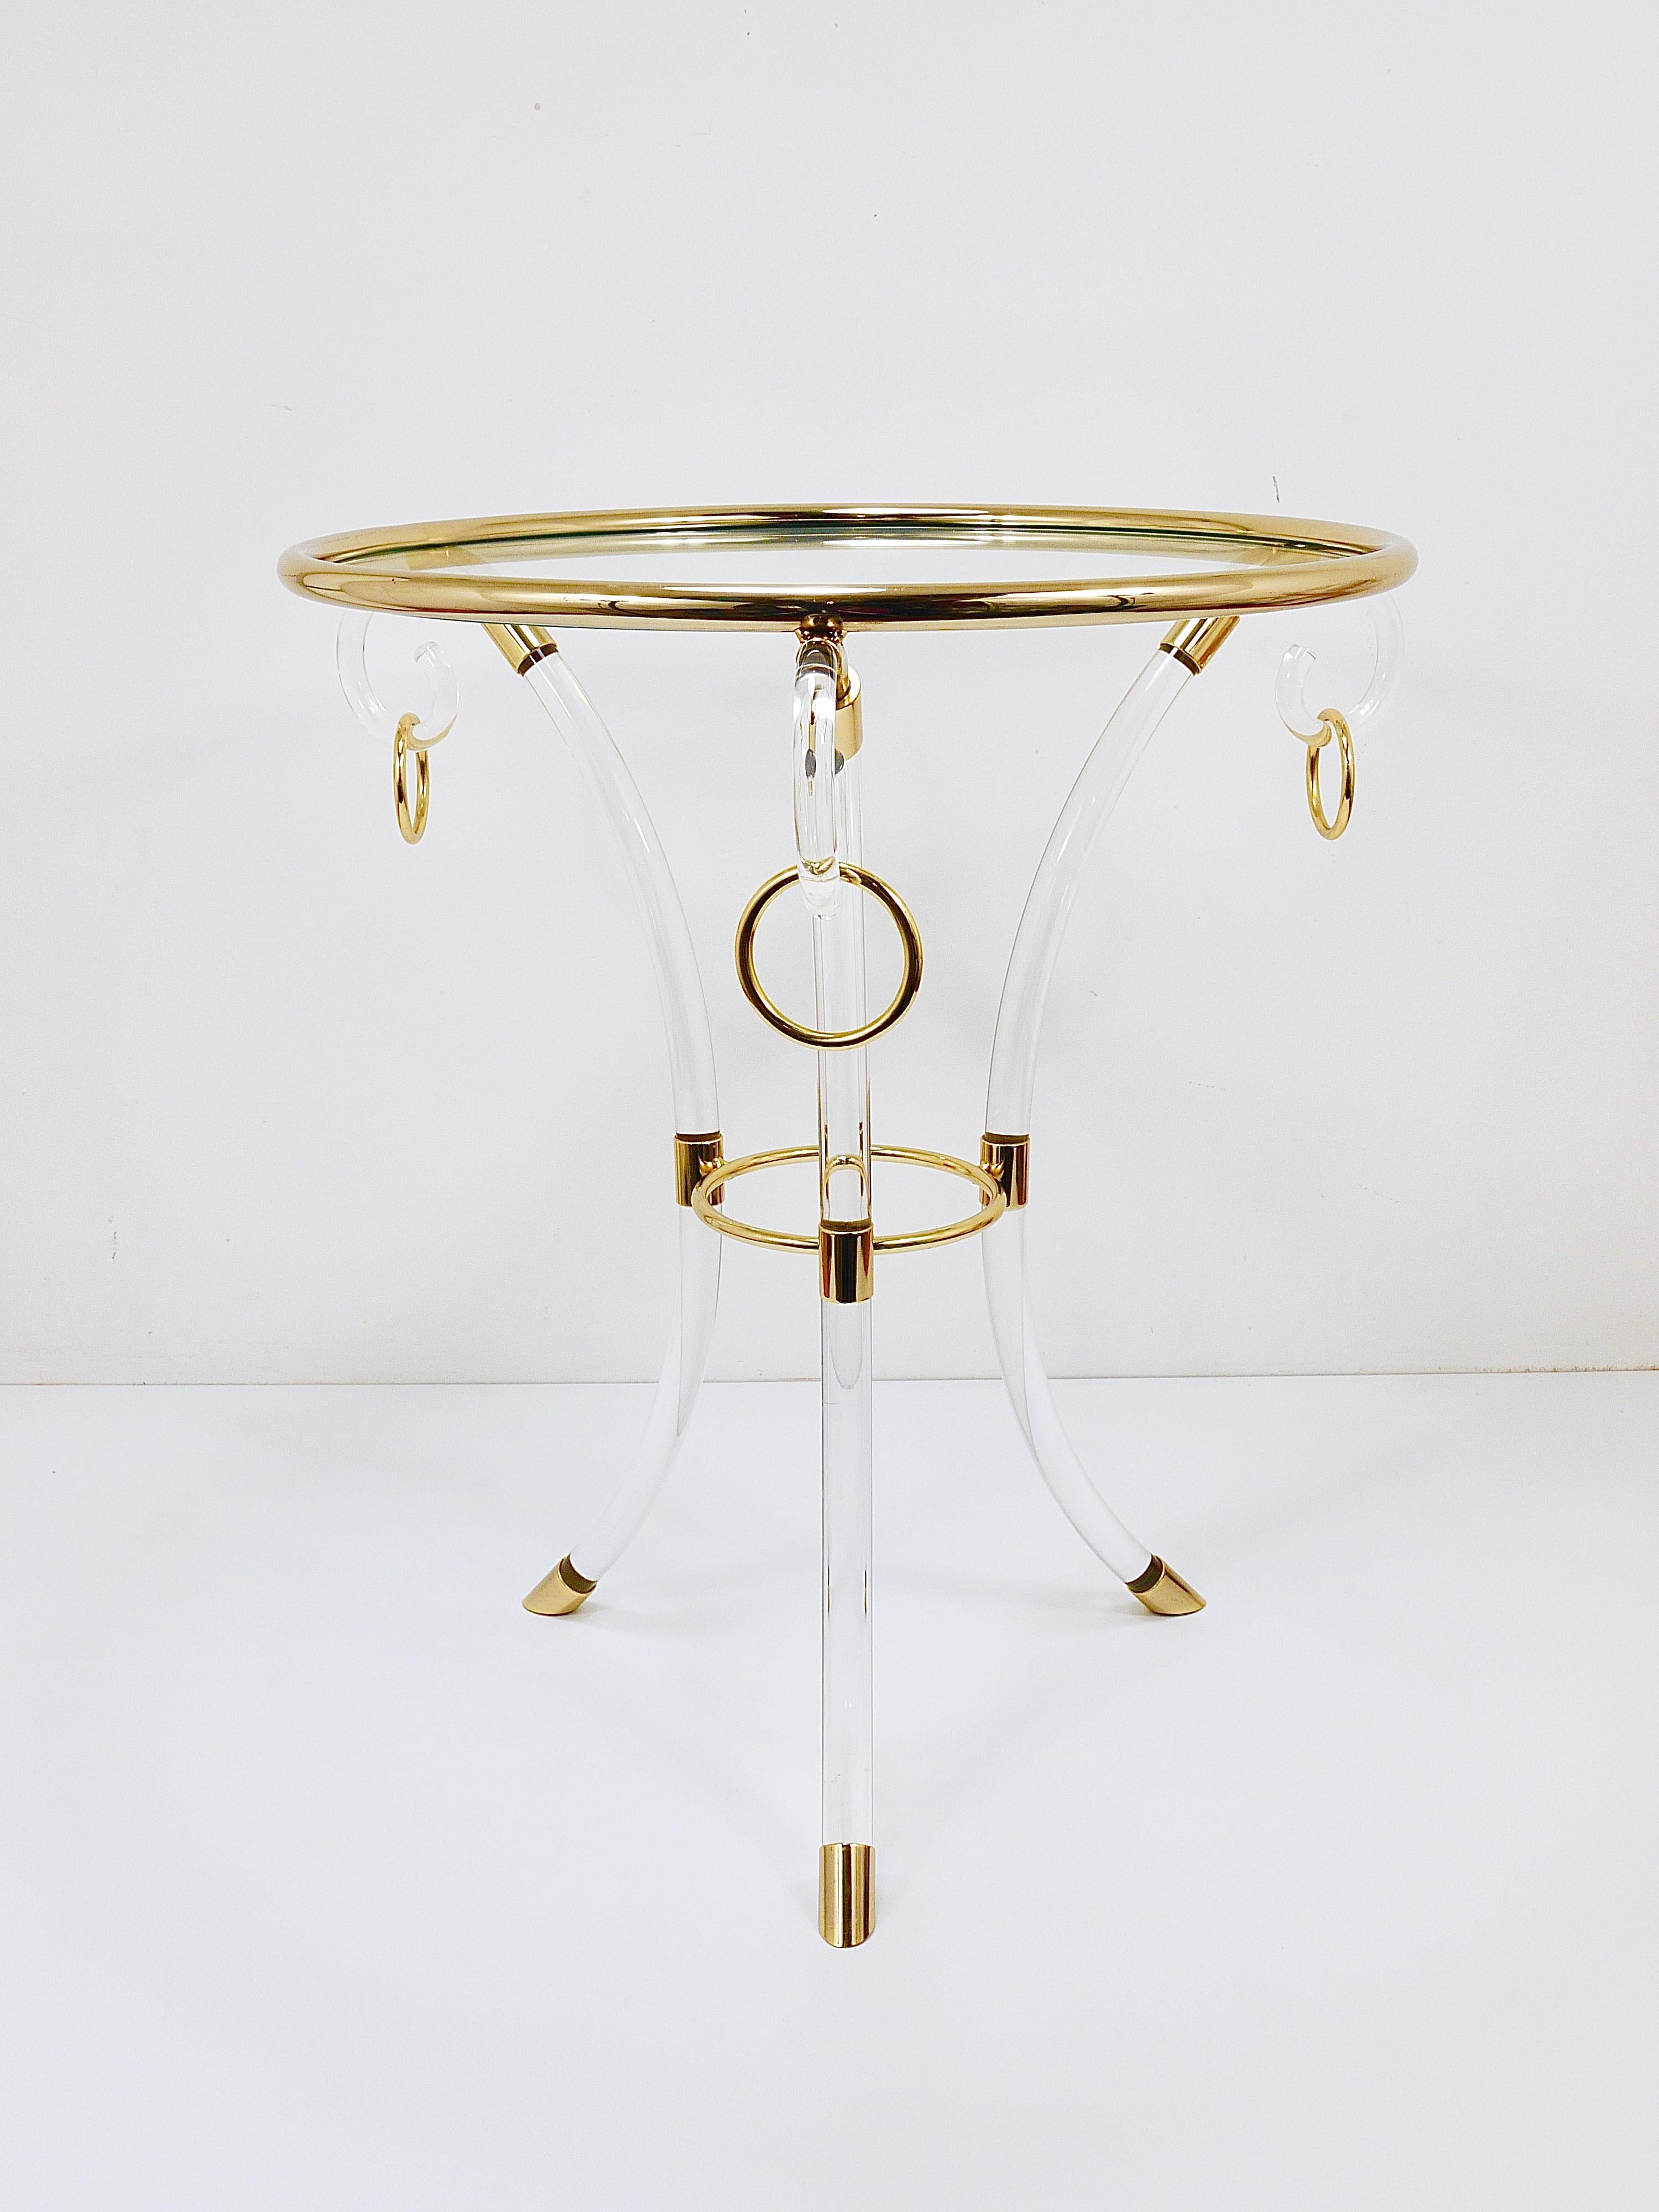 20th Century Maison Jansen Style Lucite & Gilt Metal Tripod Coffee Table Pedestal Gueridon For Sale